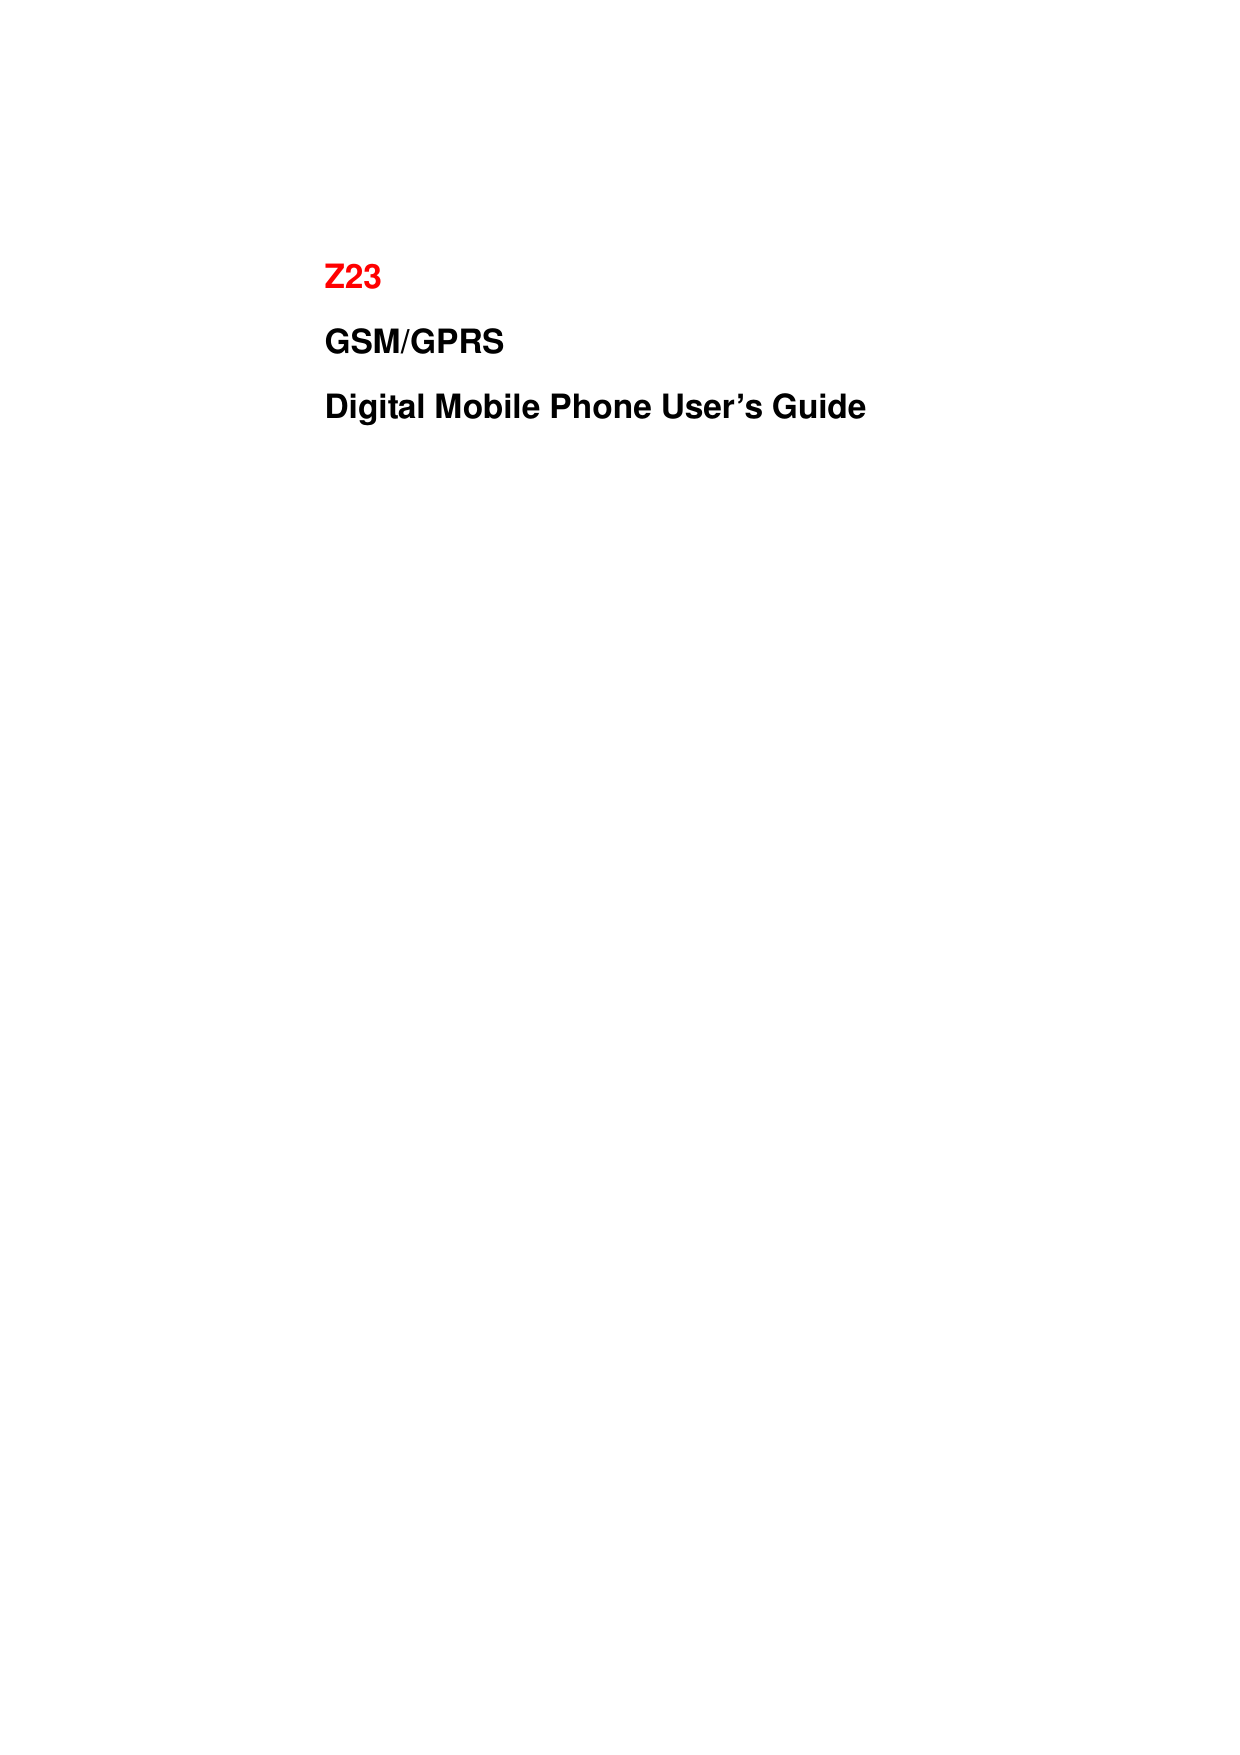      Z23 GSM/GPRS Digital Mobile Phone User’s Guide                                                                                                                                                                                                                                                         